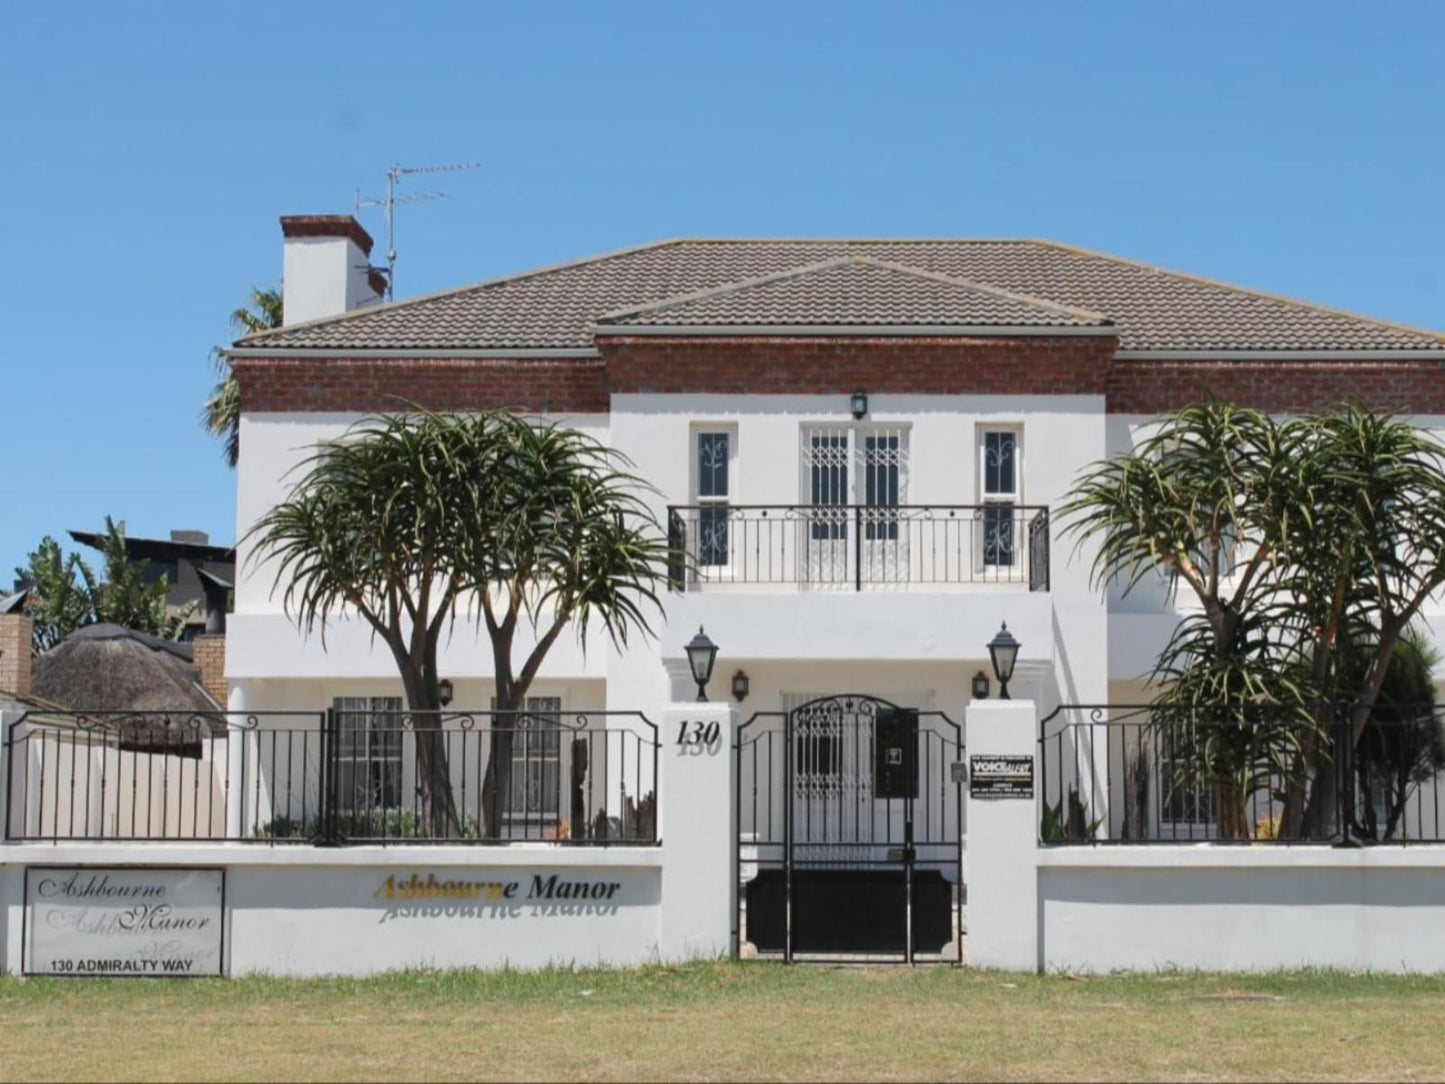 Ashbourne Manor Summerstrand Port Elizabeth Eastern Cape South Africa House, Building, Architecture